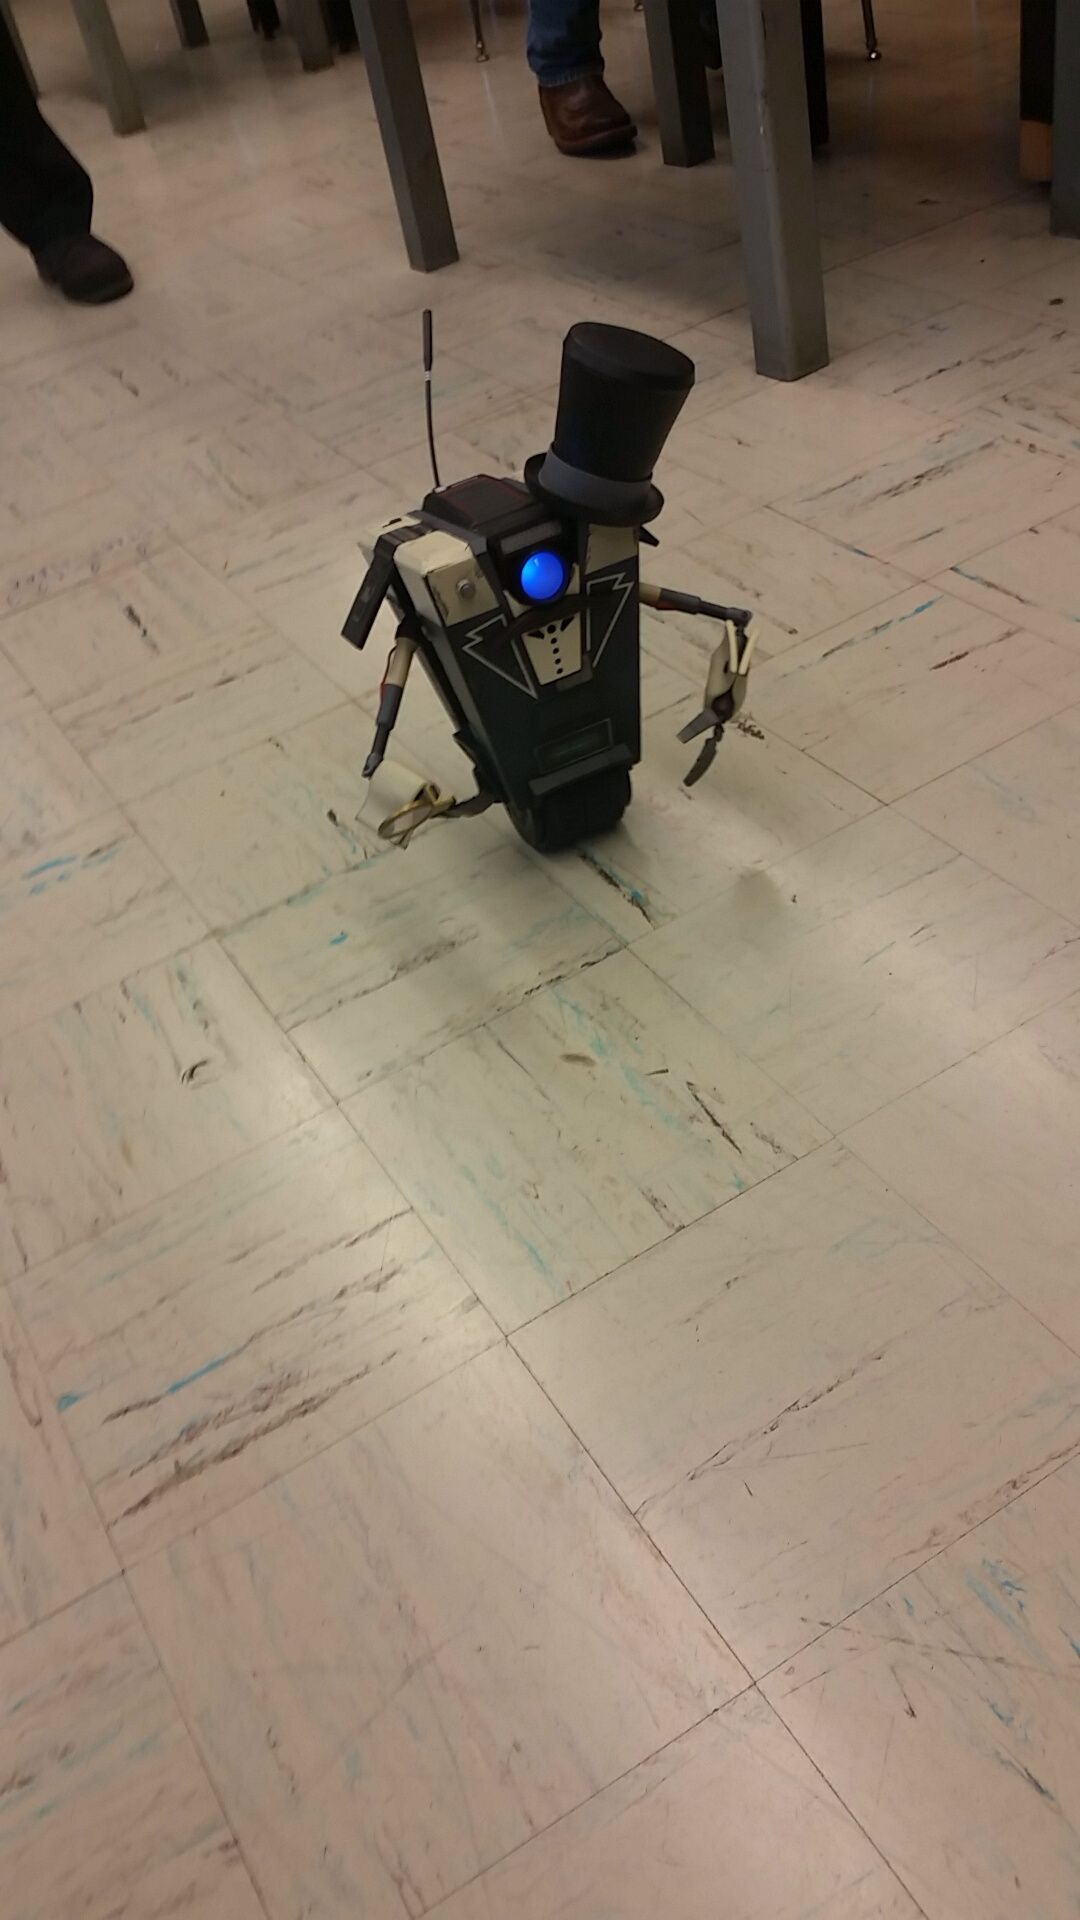 My Teacher has this Robot